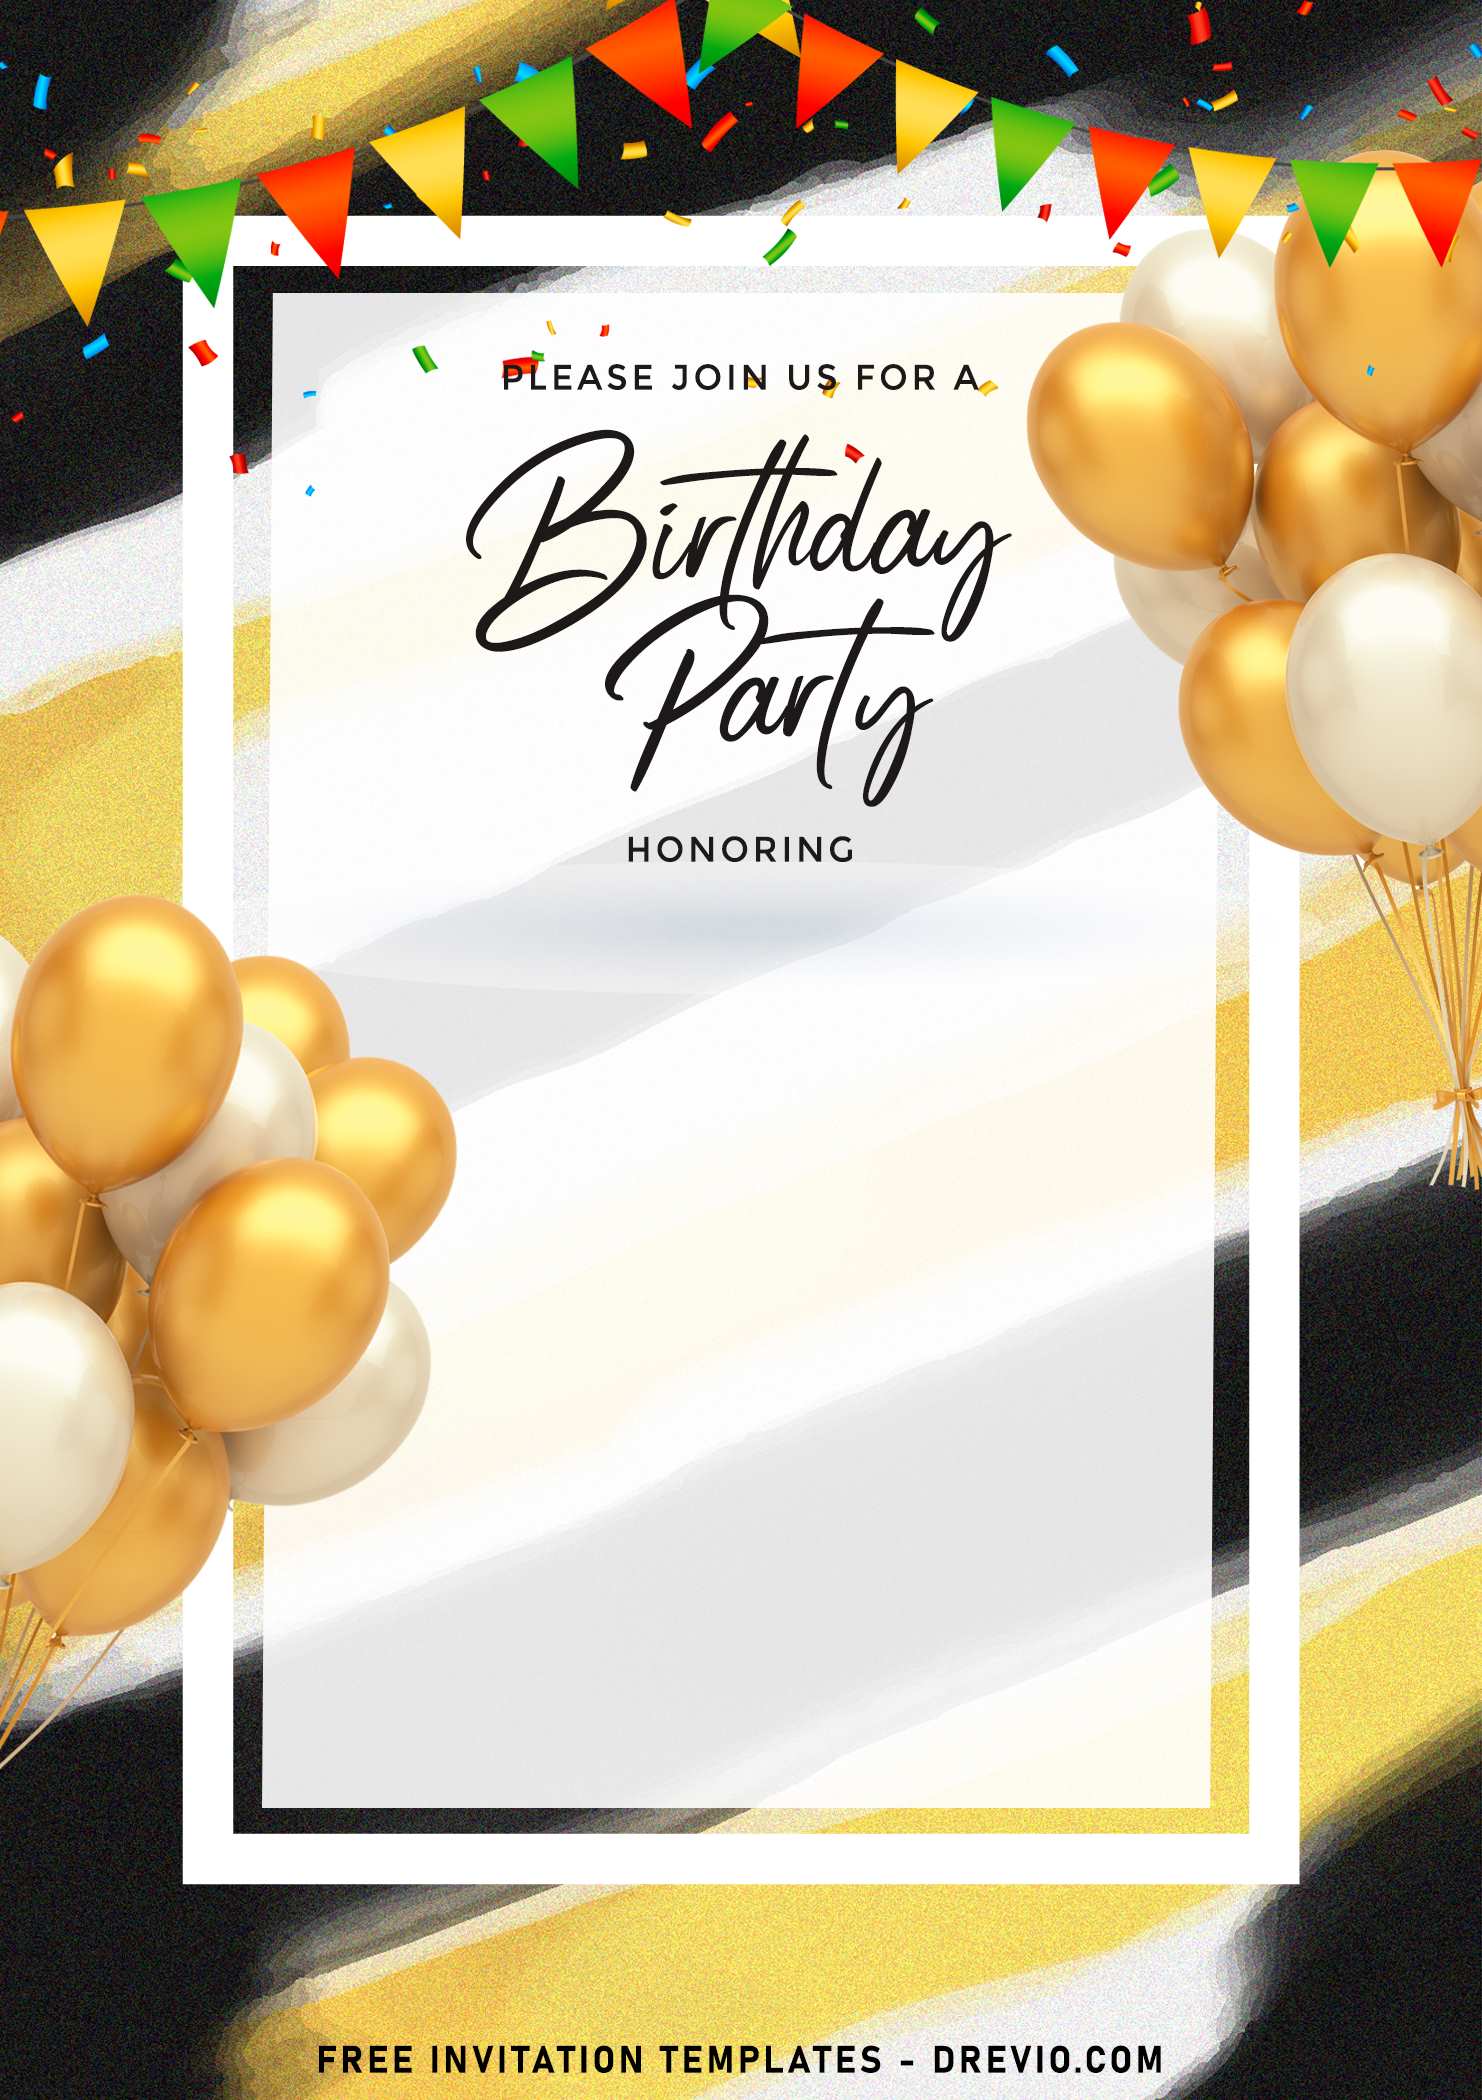 20 x Children's Birthday Party Invitations with envelopes - Olivia Samuel